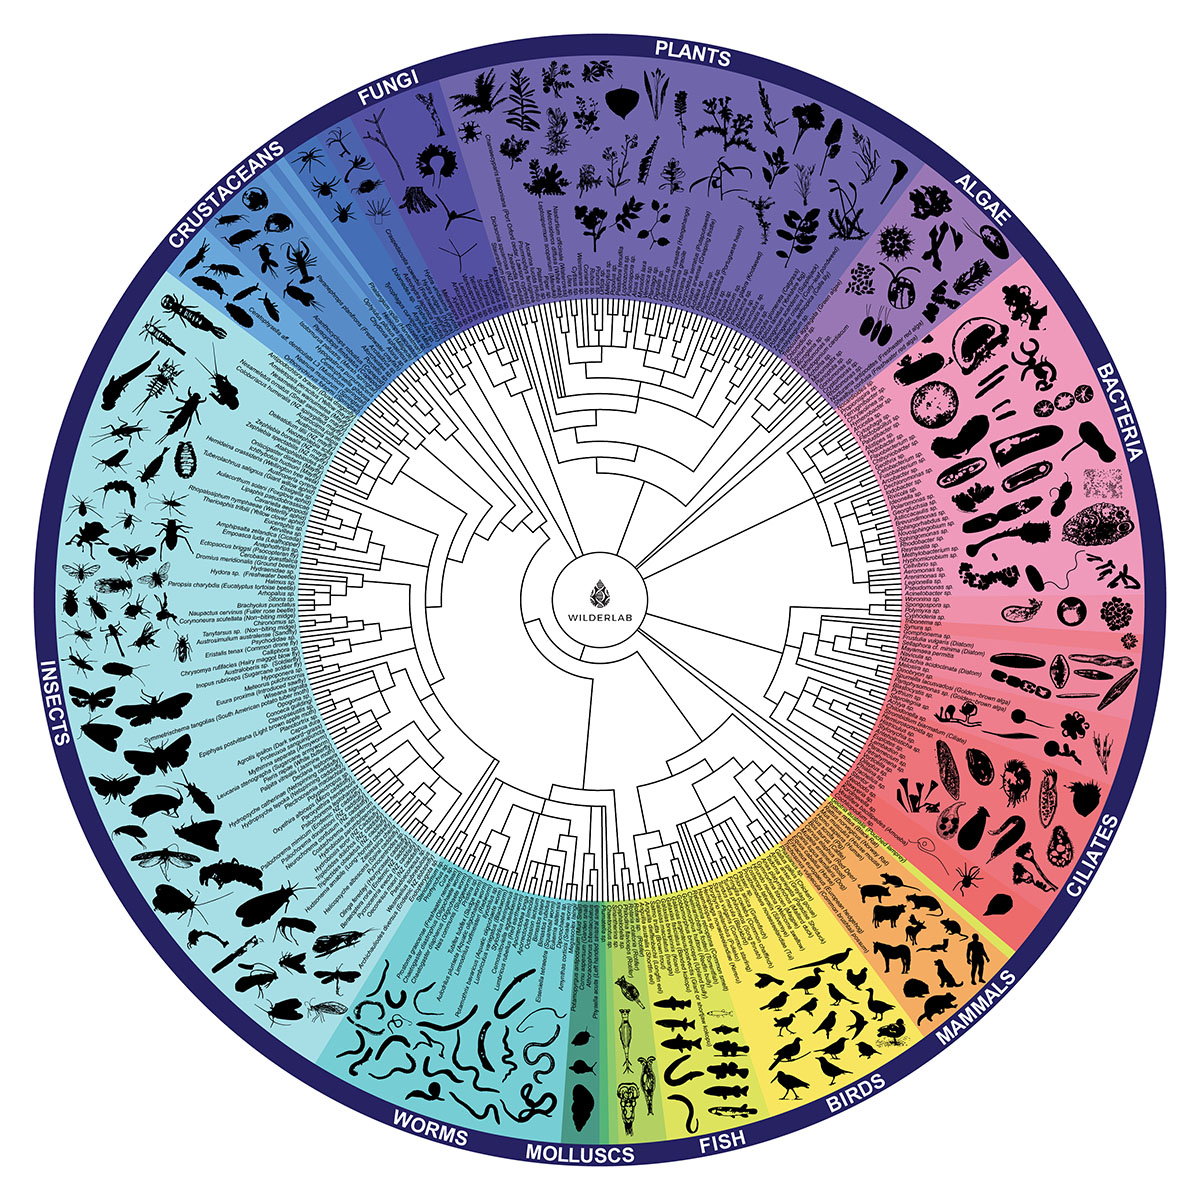 Sample eDNA wheel of life graphic showing lamprey DNA present